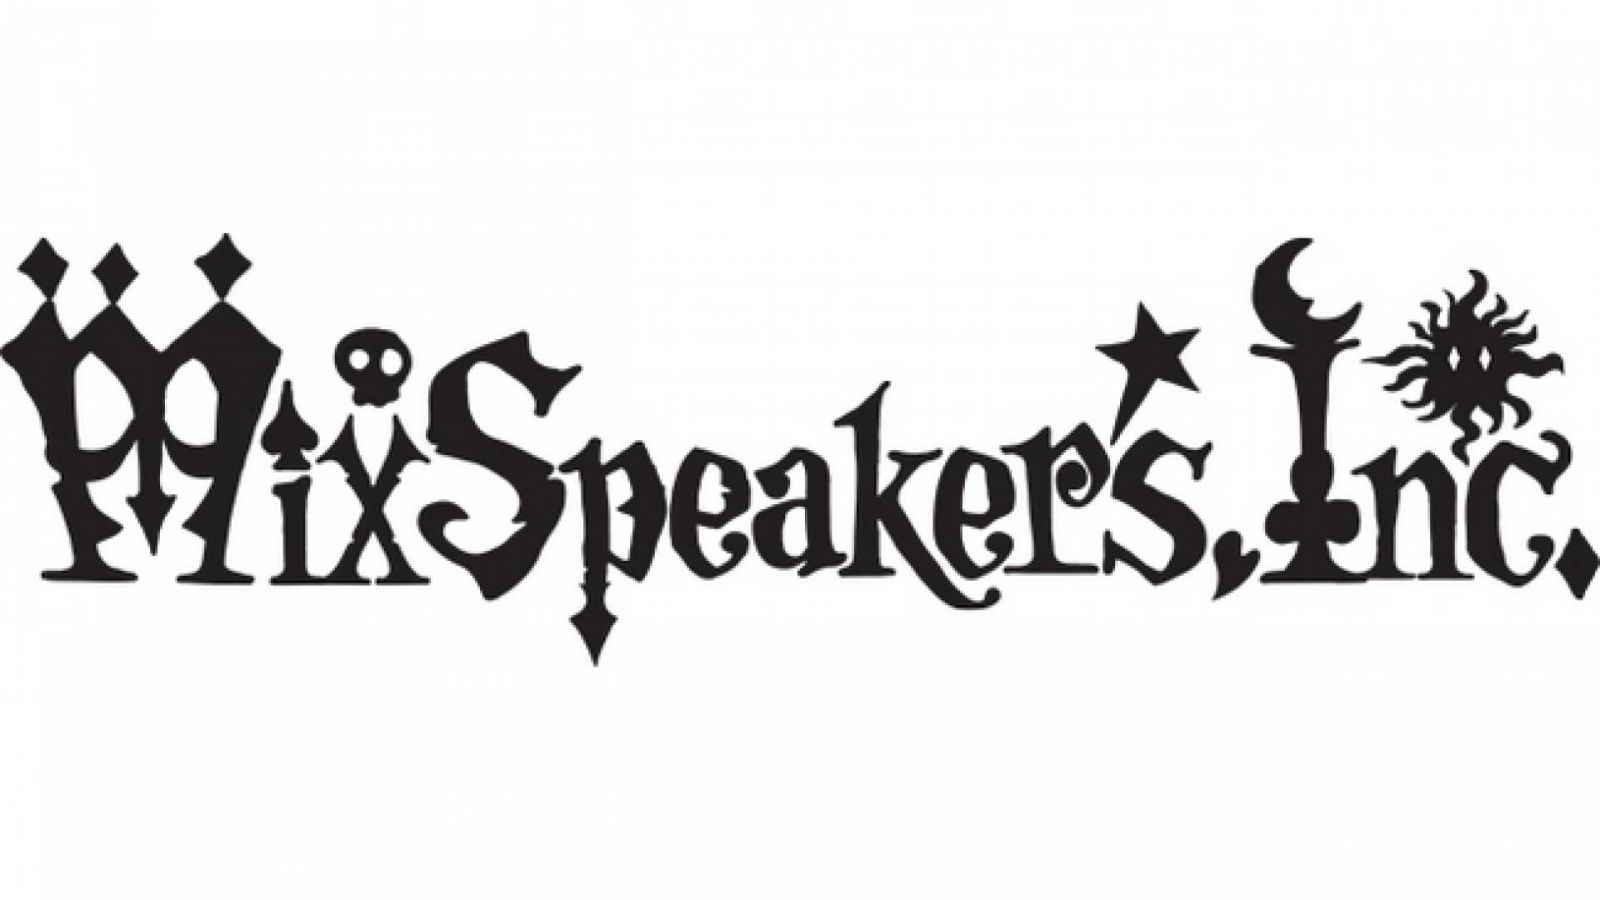 Nowy członek Mix Speaker's,Inc. © Mix Speaker's, Inc.